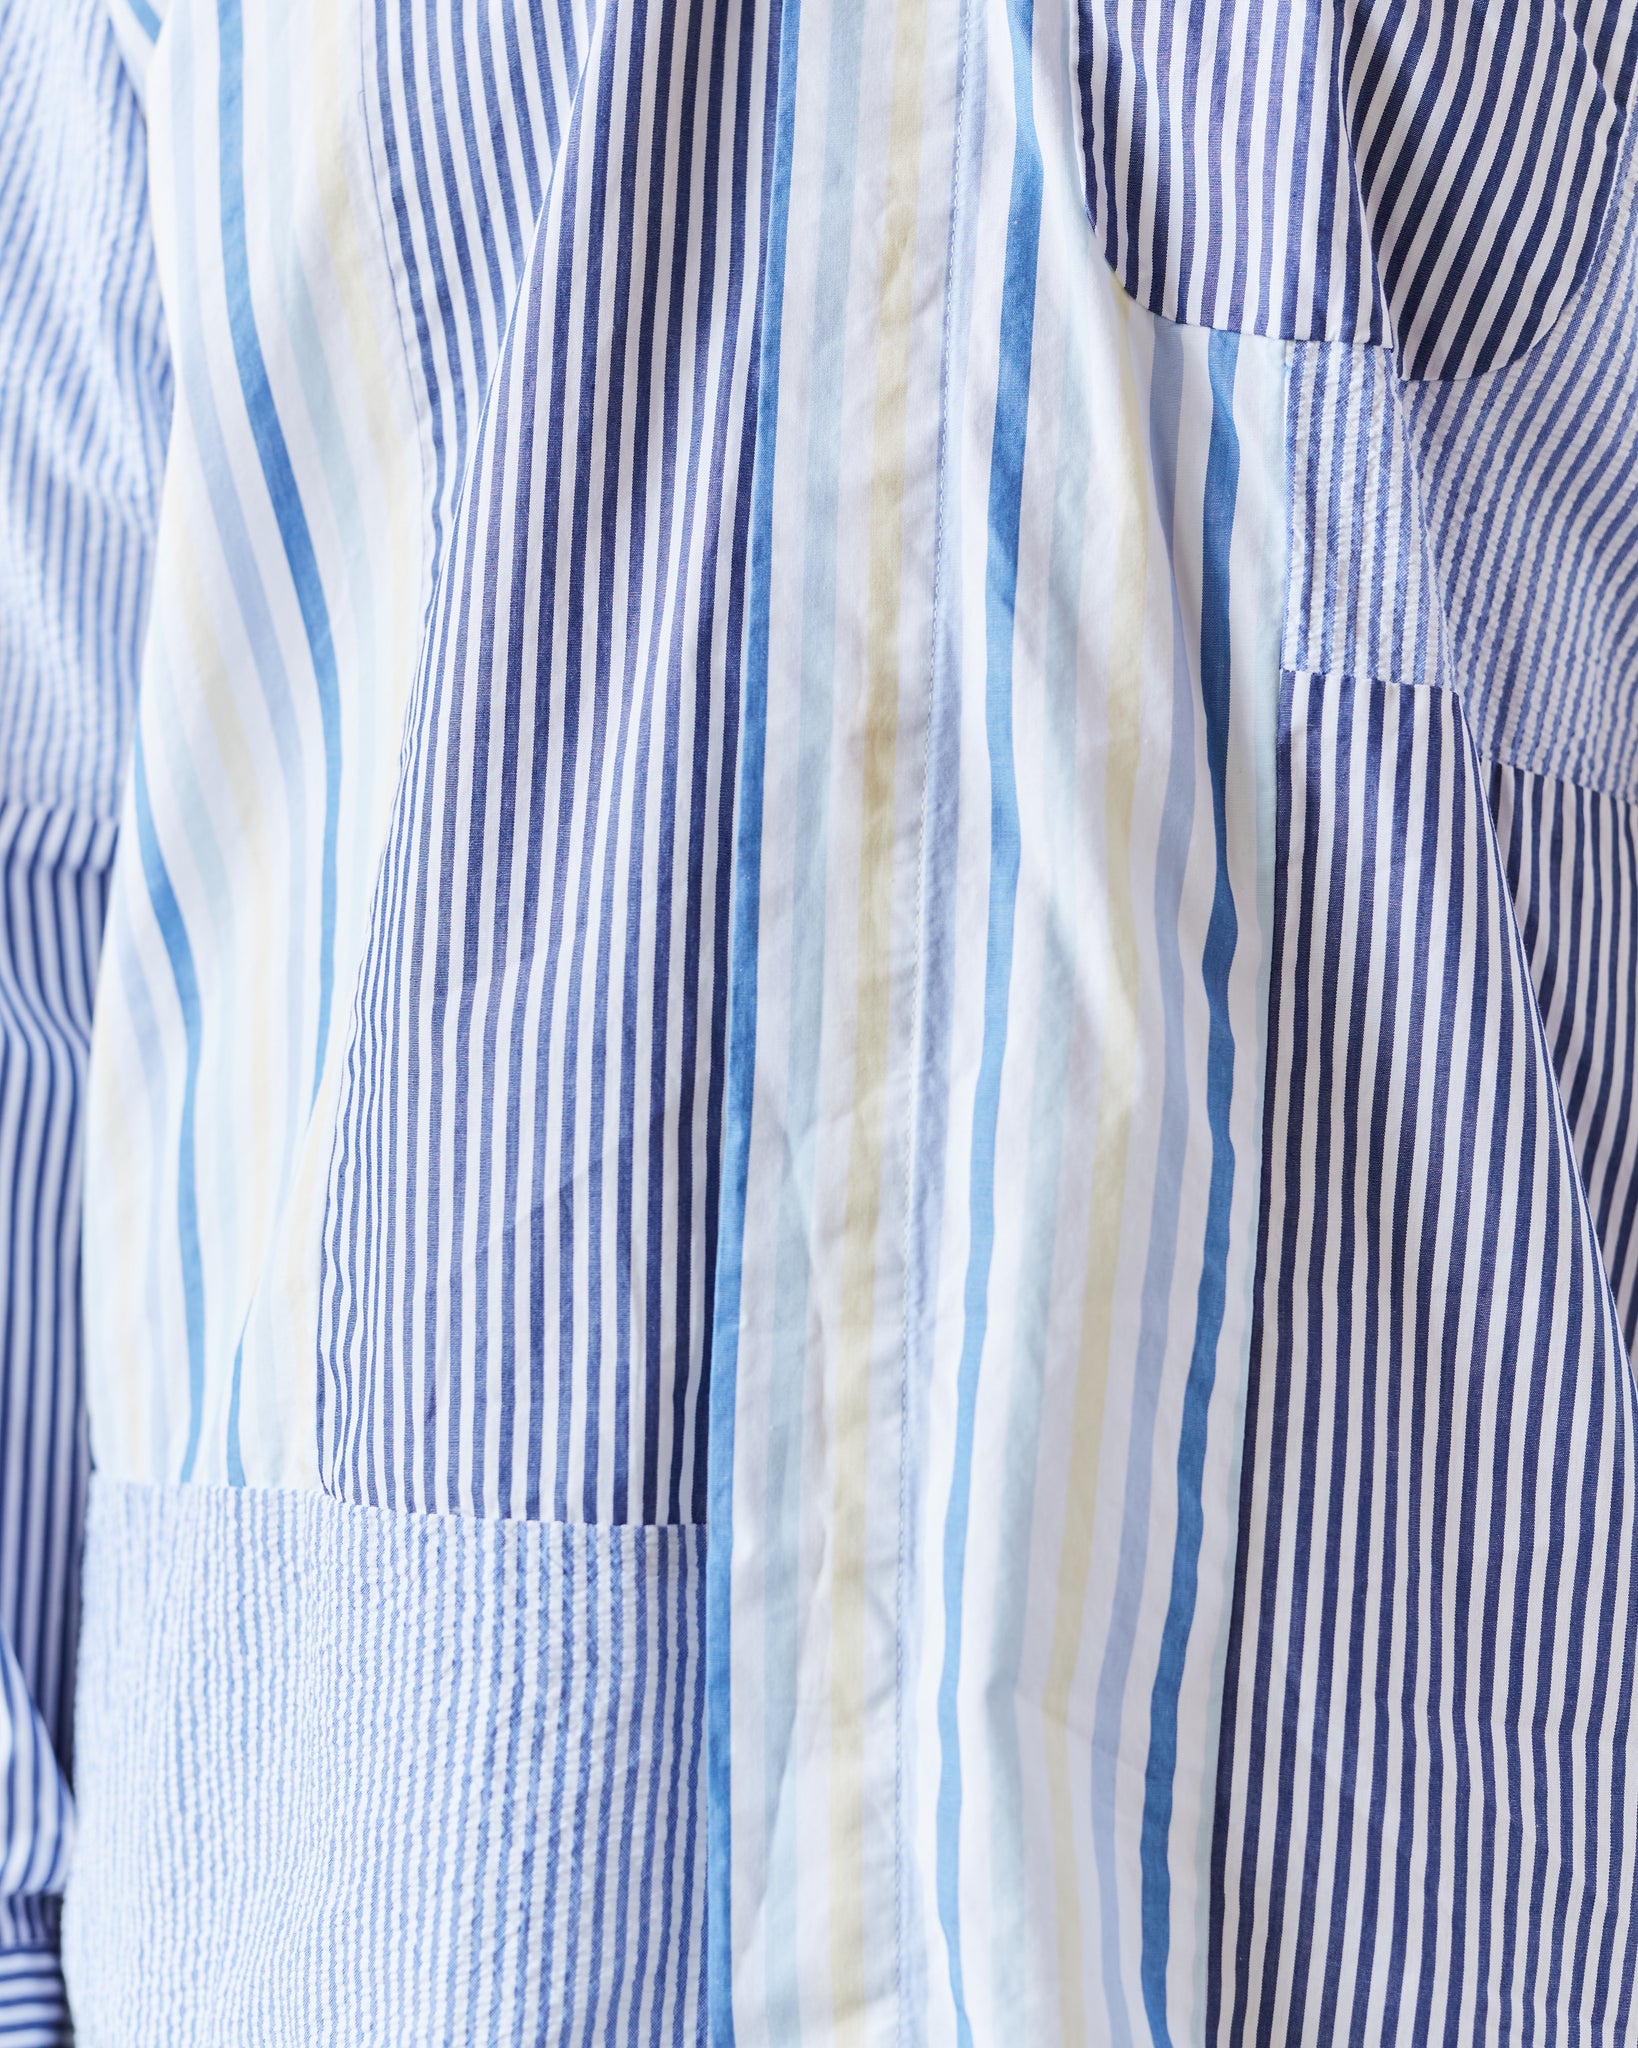 Engineered Garments Short Collar Shirt, Blue/White Stripe